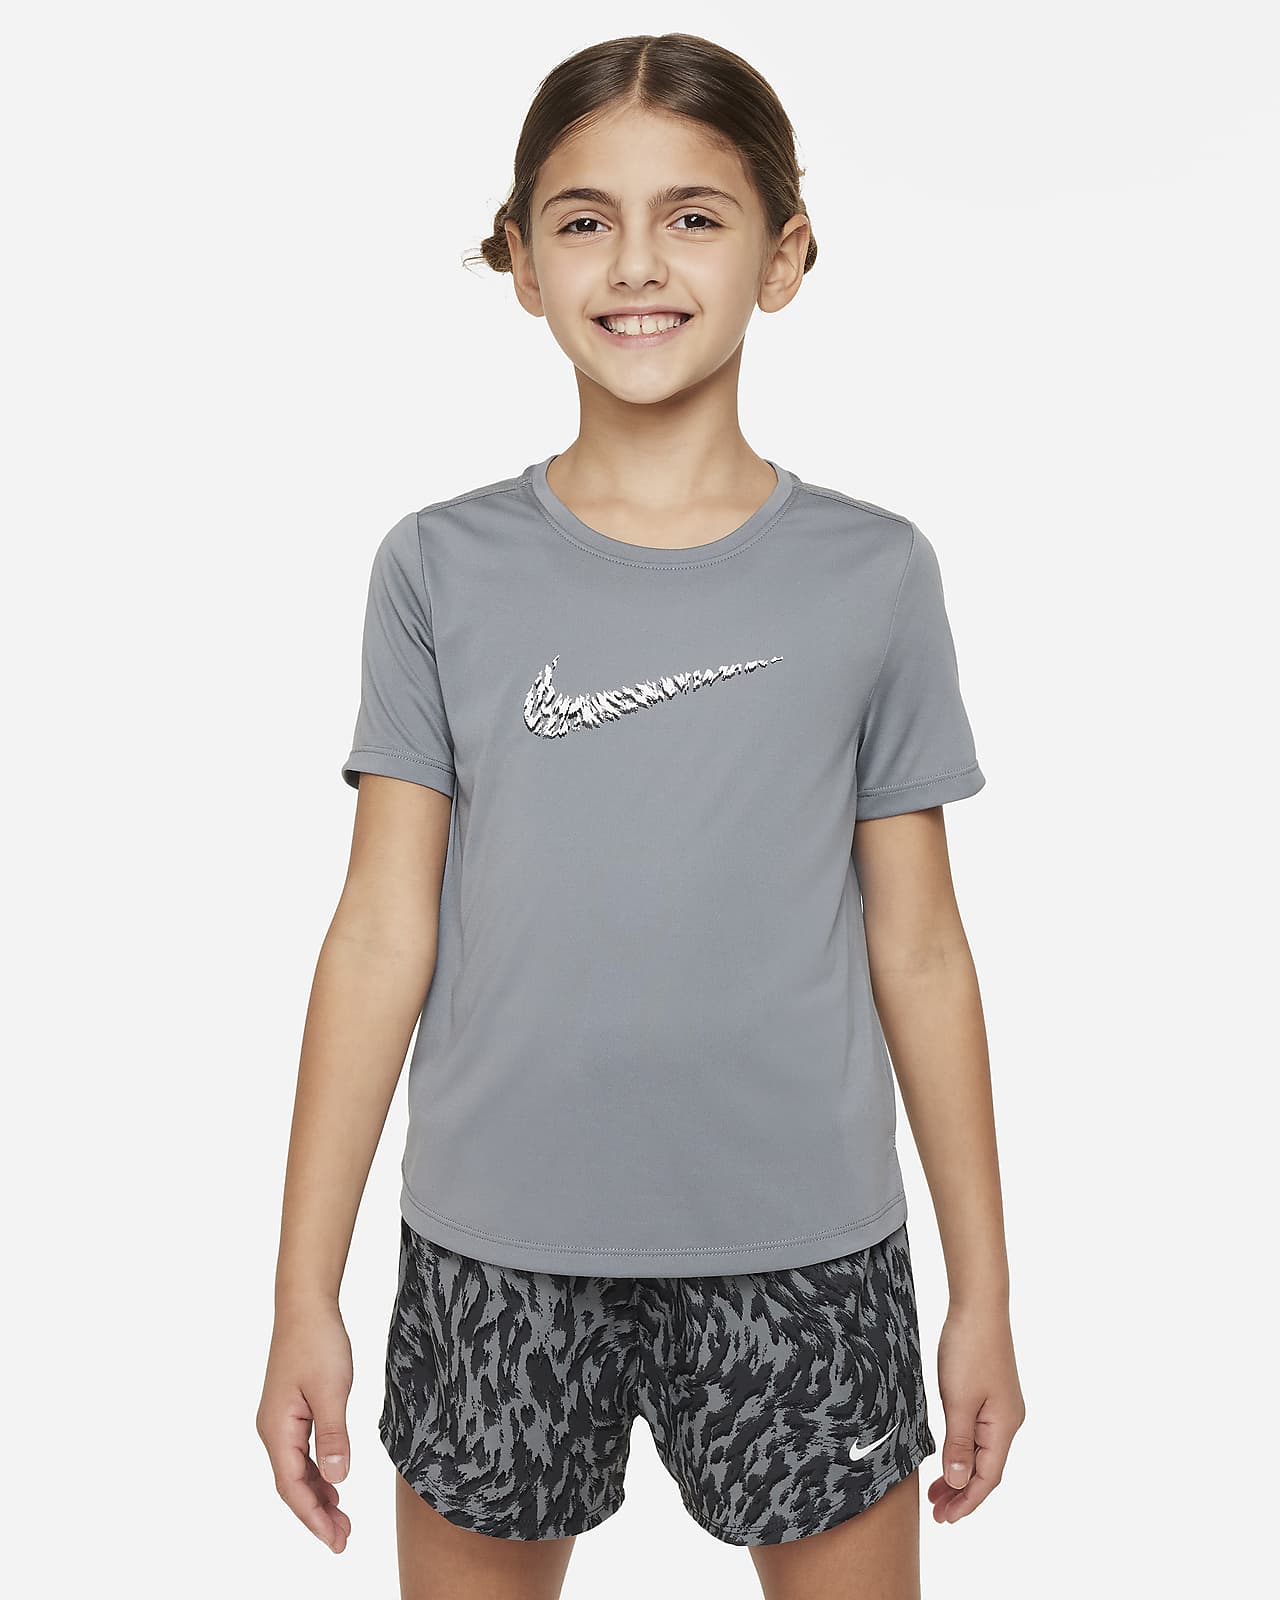 Nike Dri-FIT One Older Kids' (Girls') Training Leggings